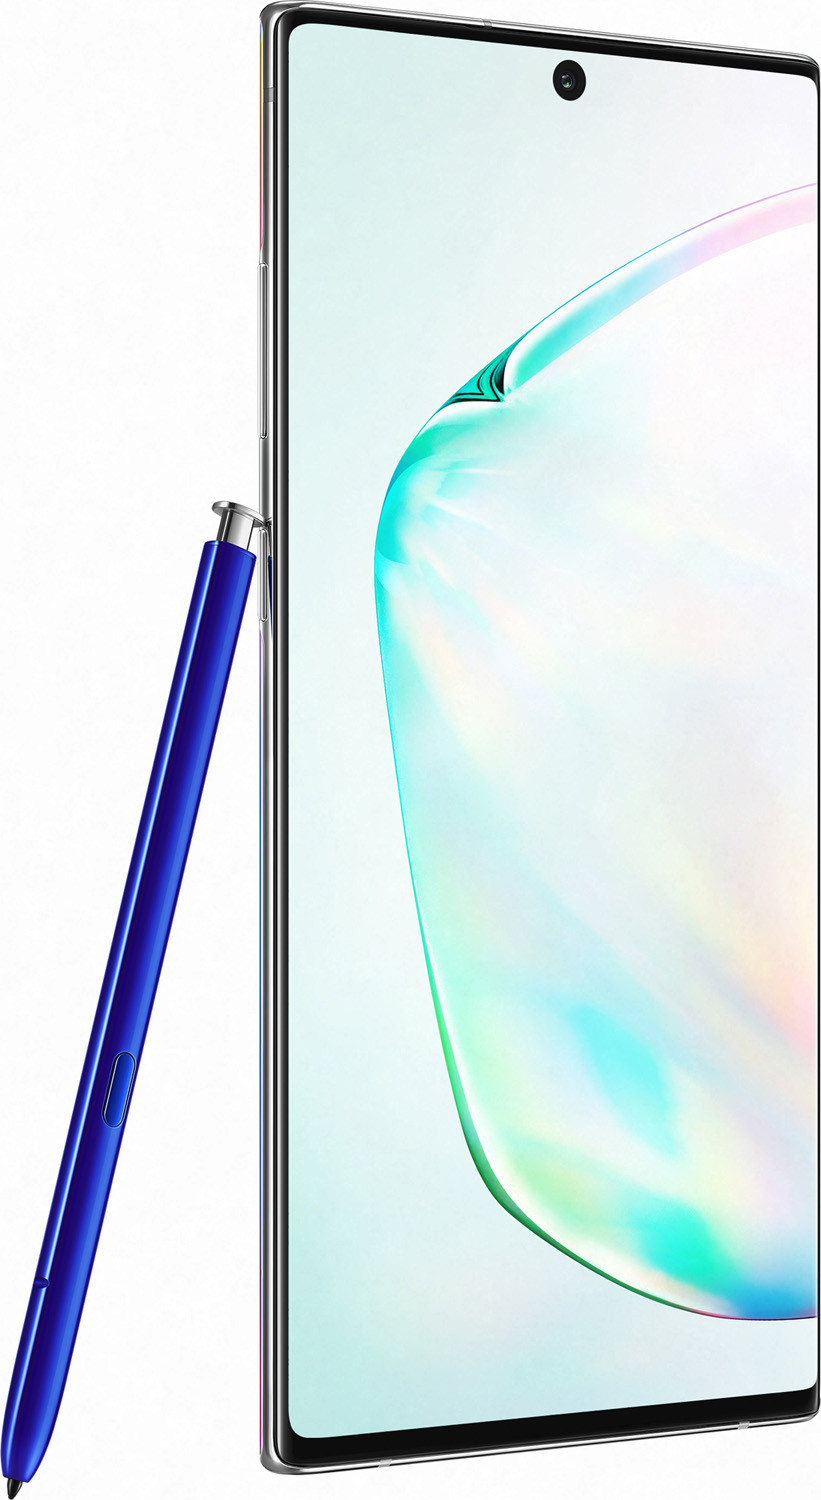 Смартфон Samsung Galaxy Note 10 Plus 12/512GB Aura Glow (Аура)